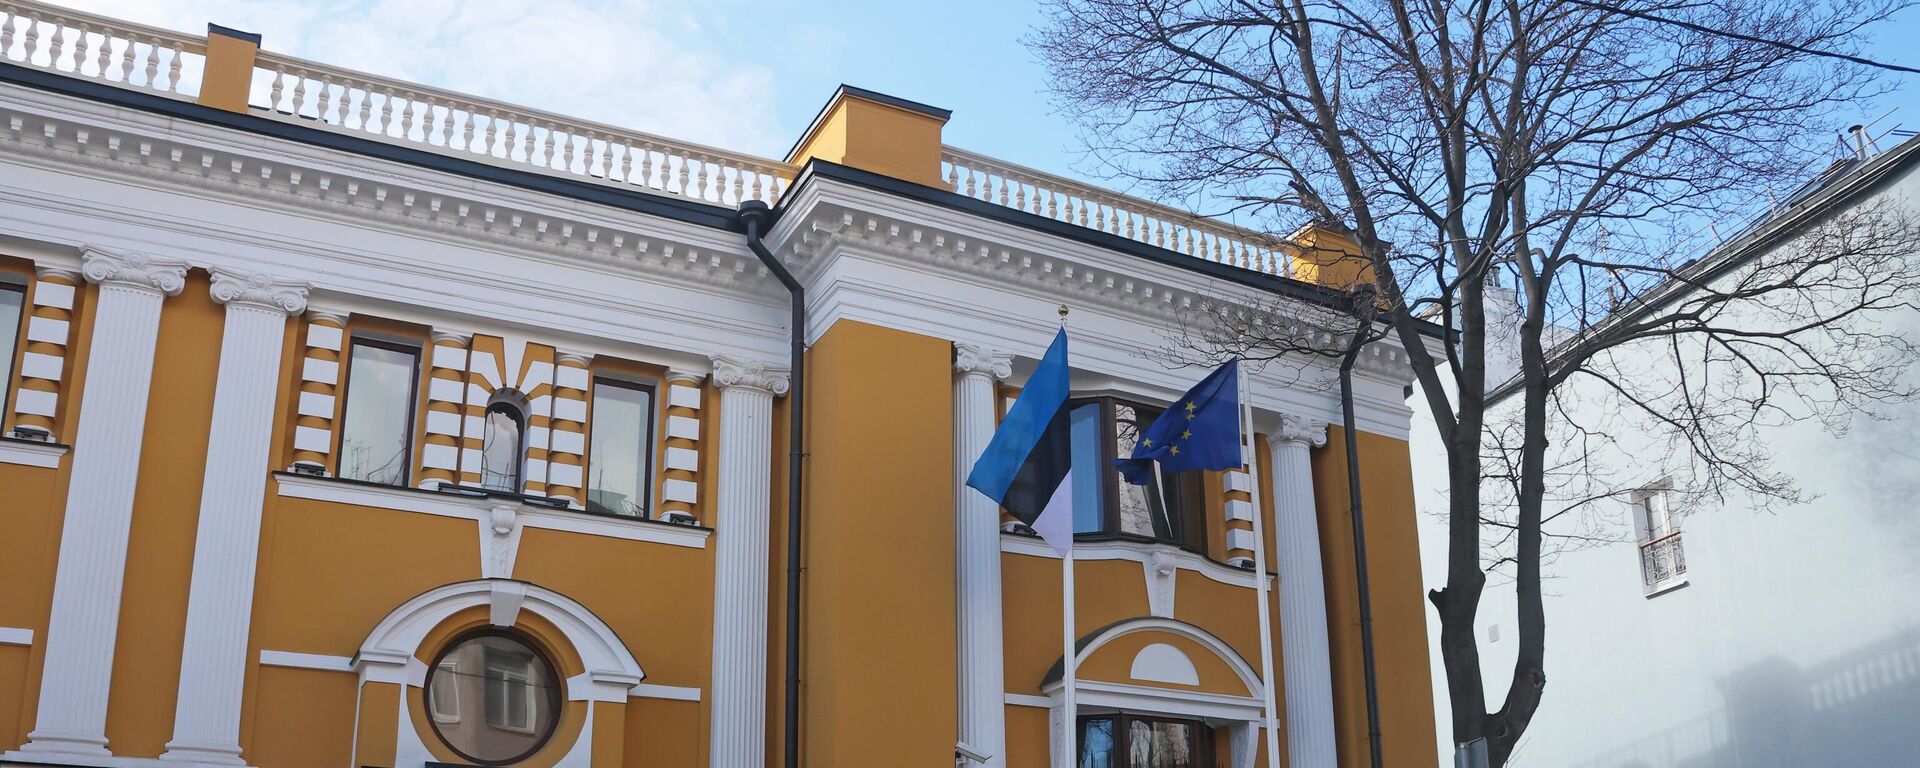 Zgrada estonske ambasade u Moskvi - Sputnik Srbija, 1920, 03.08.2021